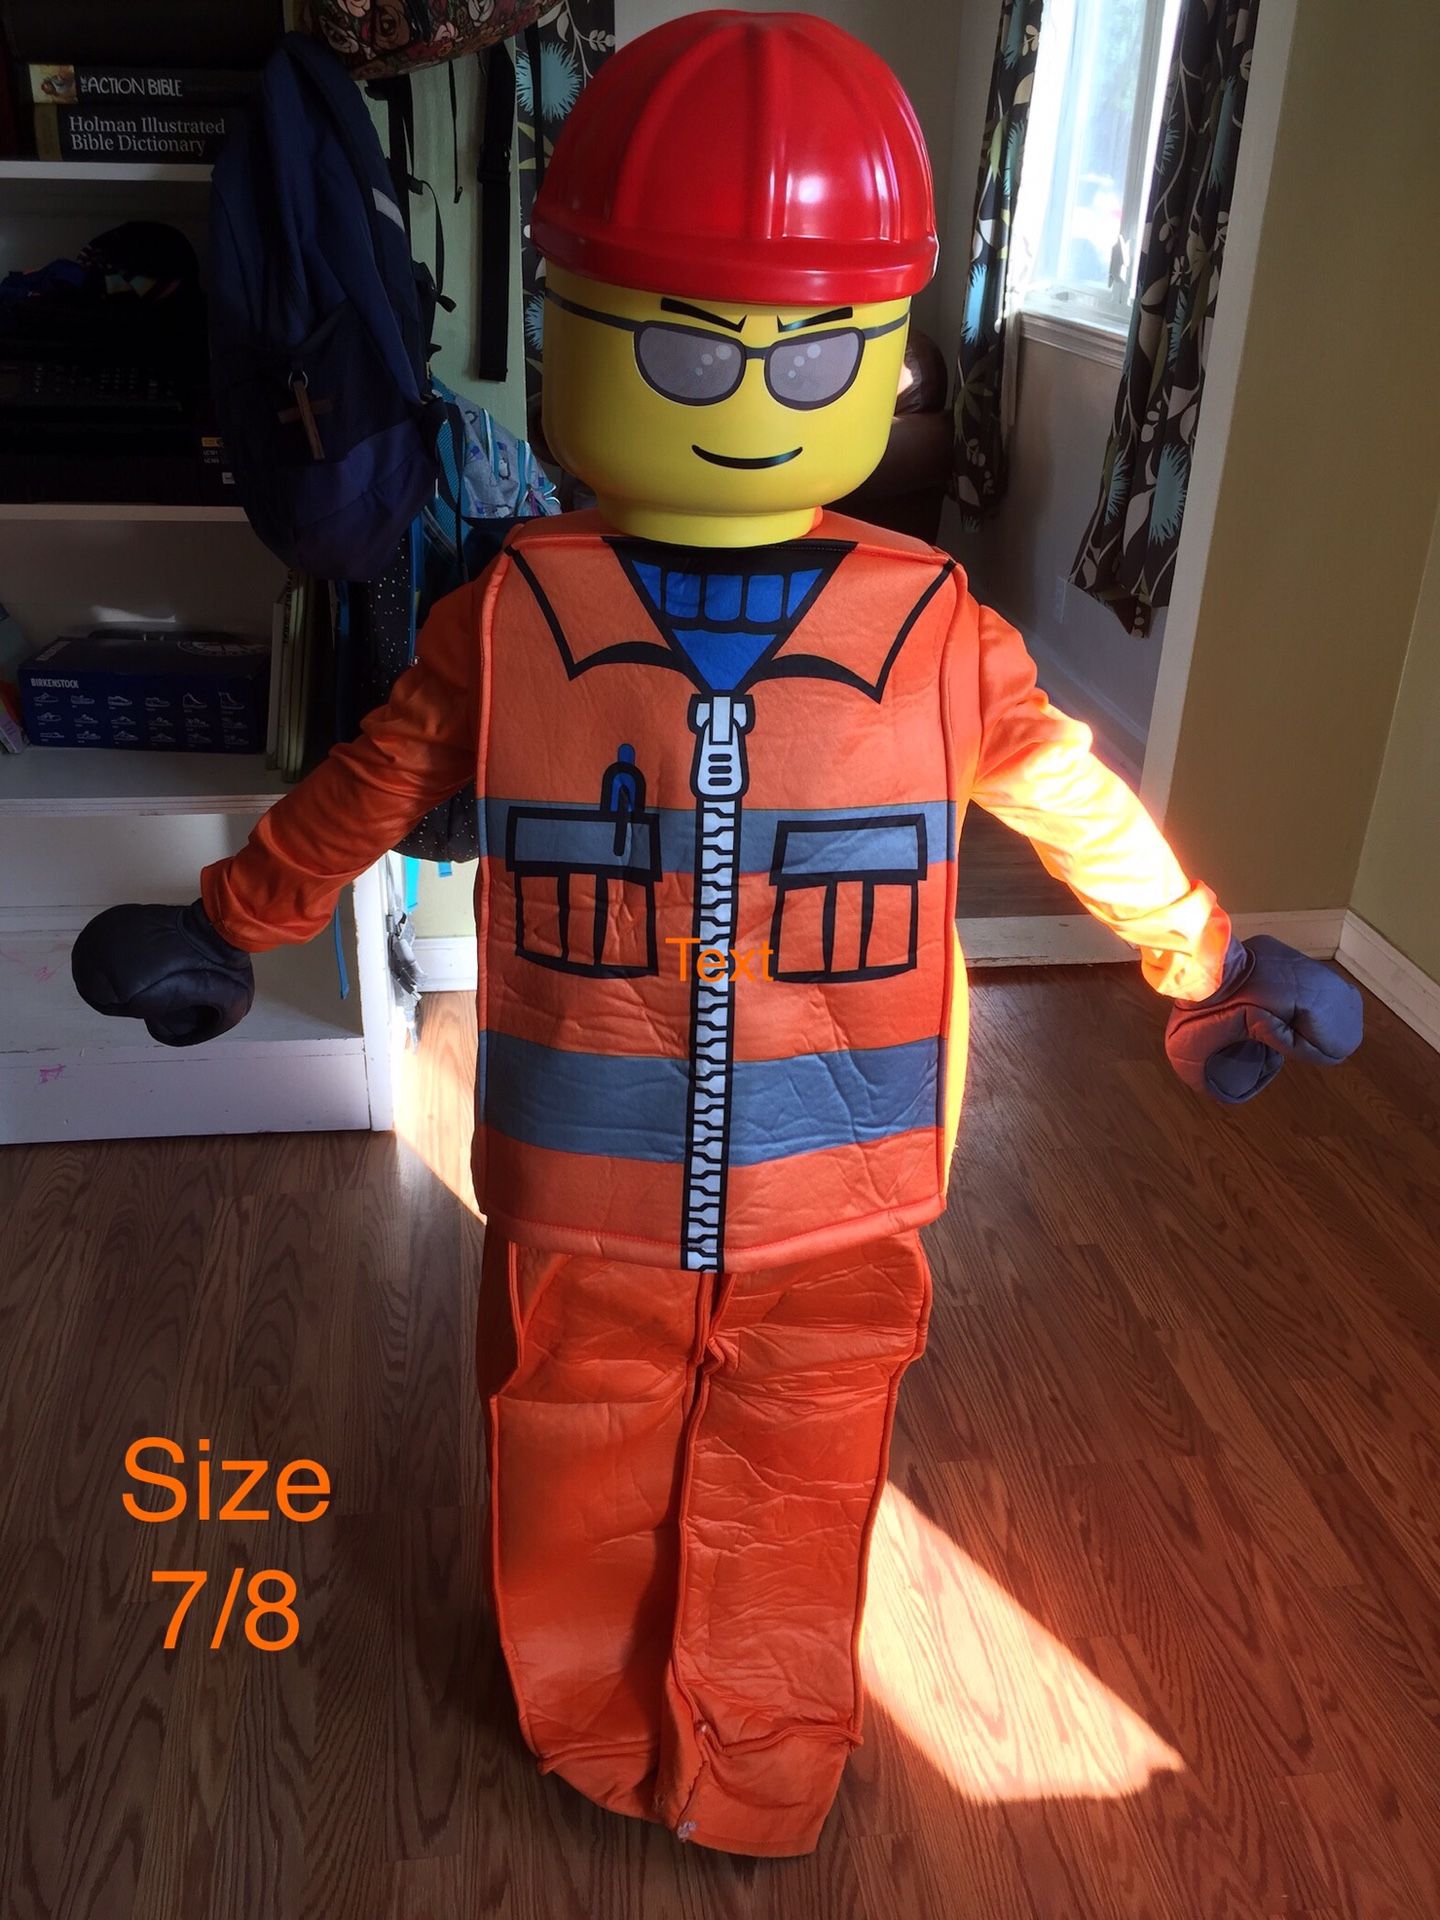 Lego construction man Halloween costume size 7/8